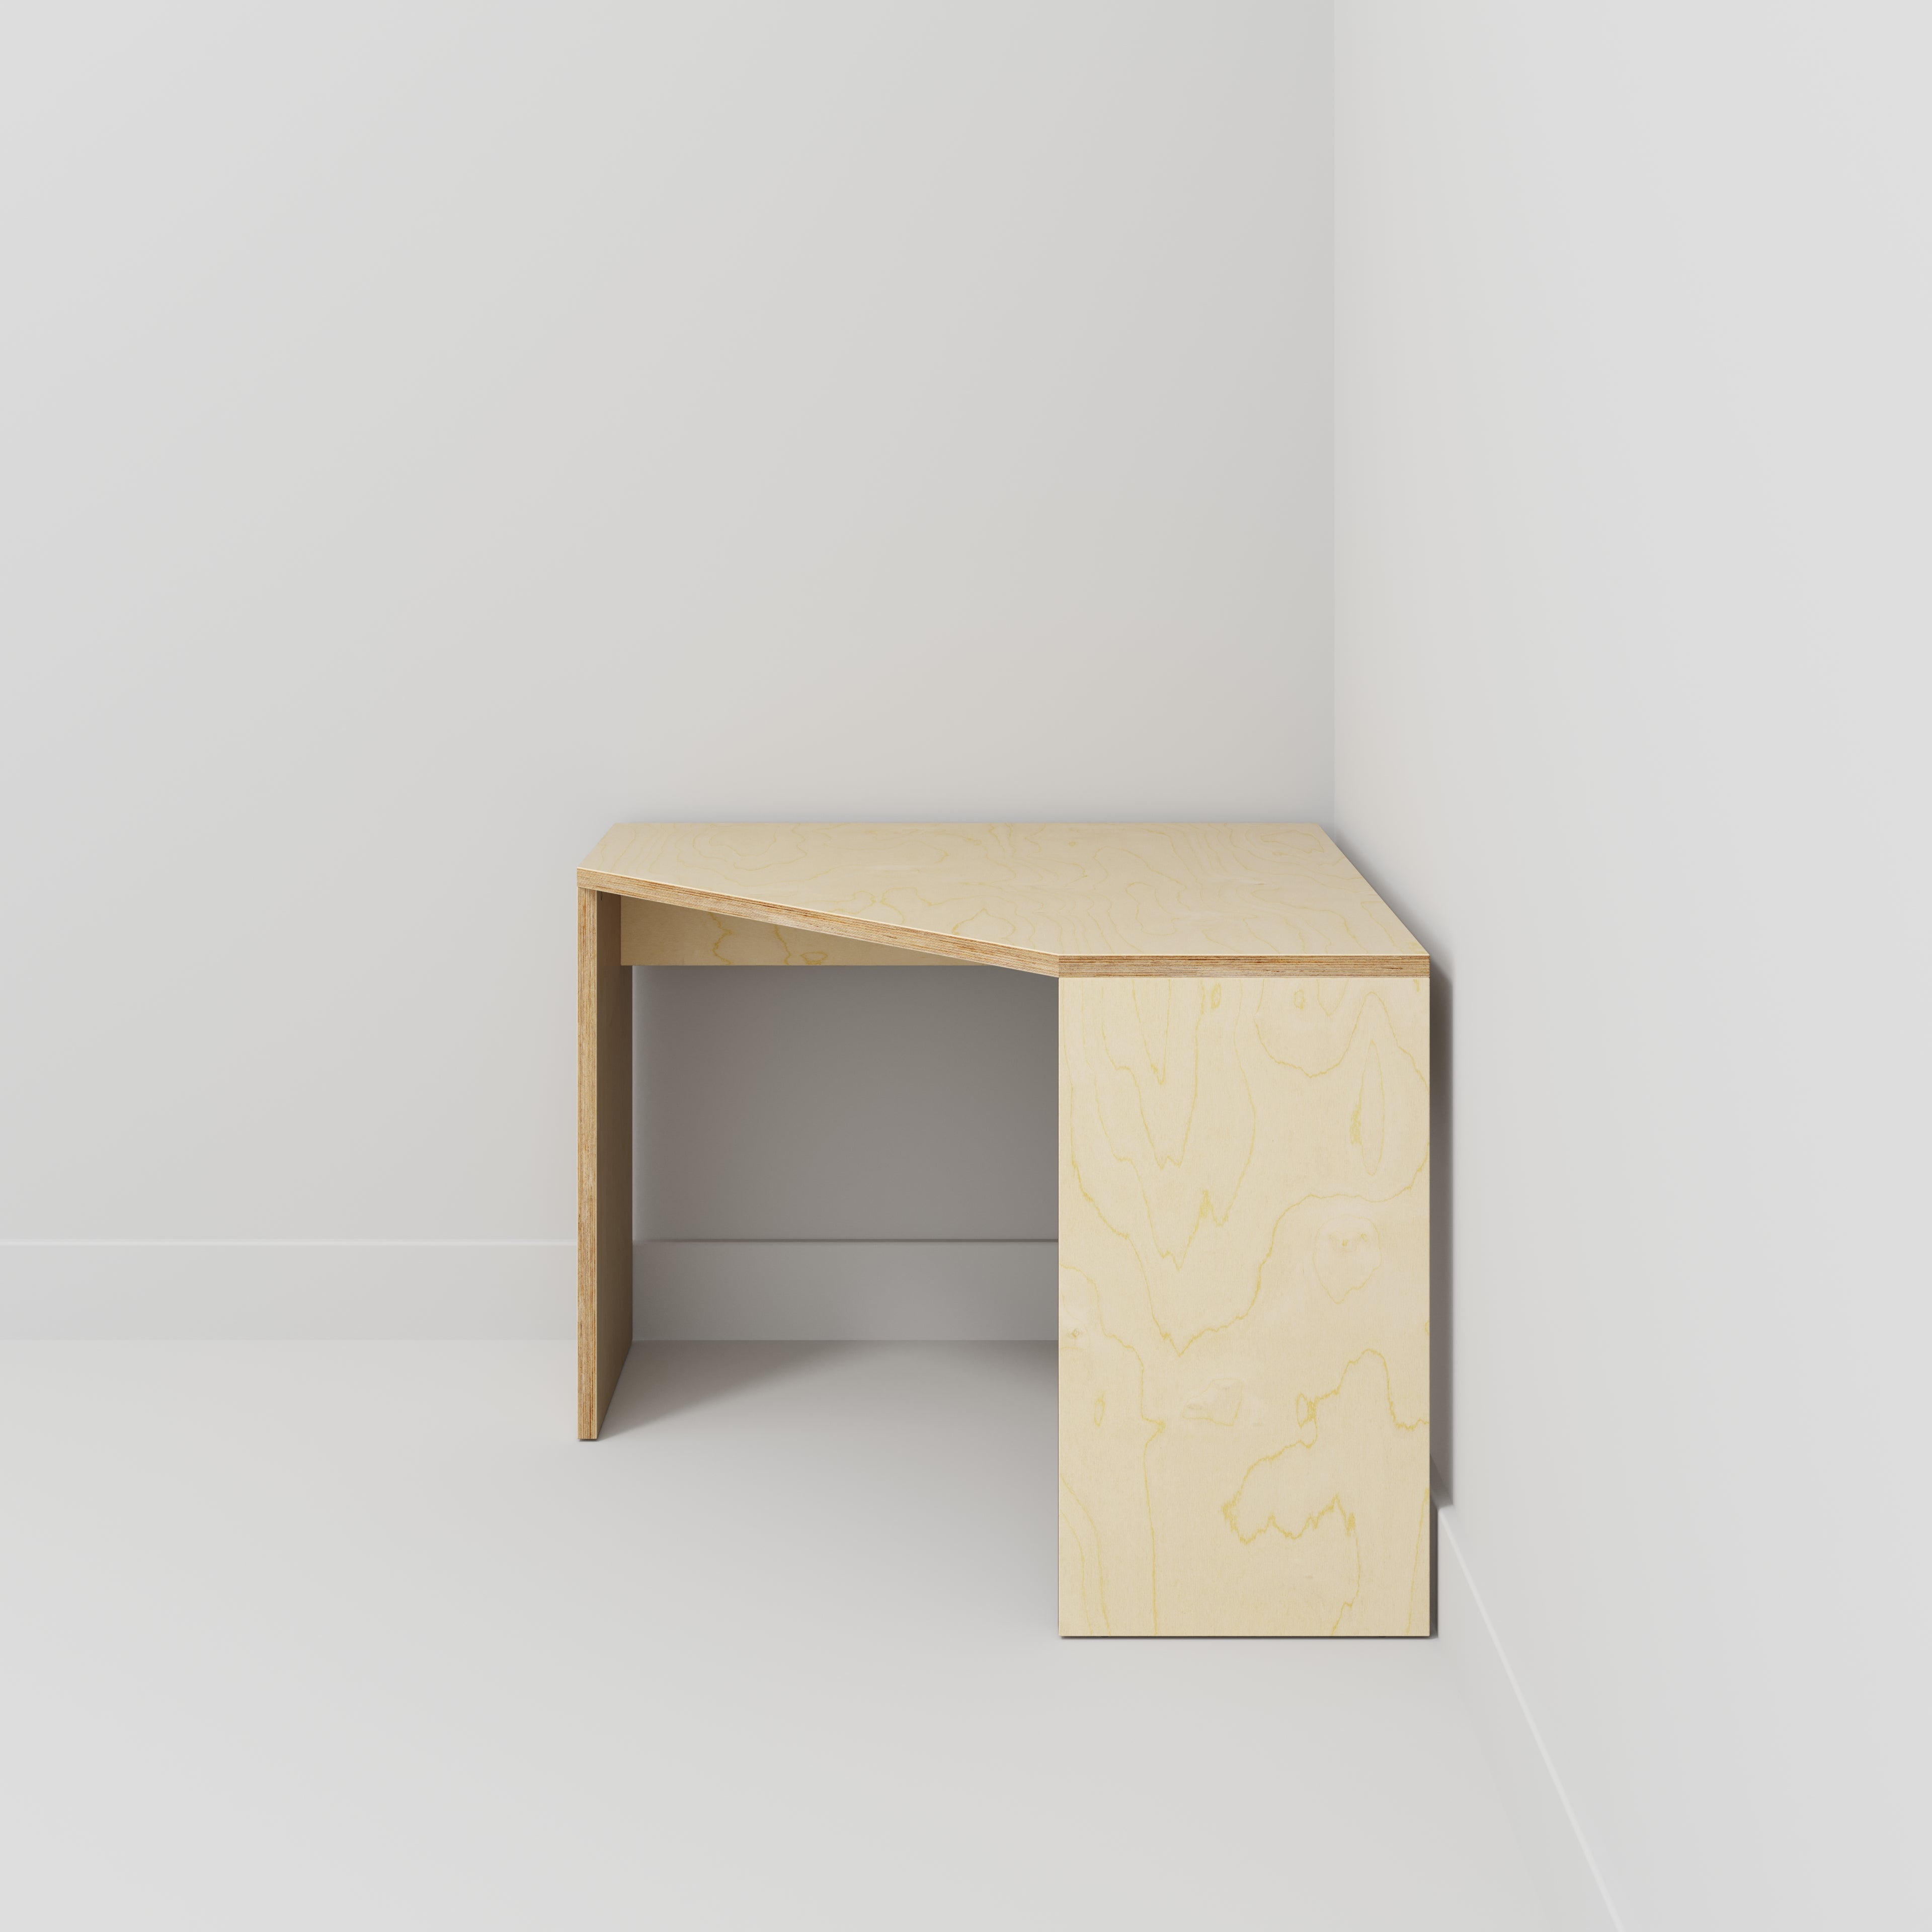 Custom Plywood Corner Desk with Solid Sides